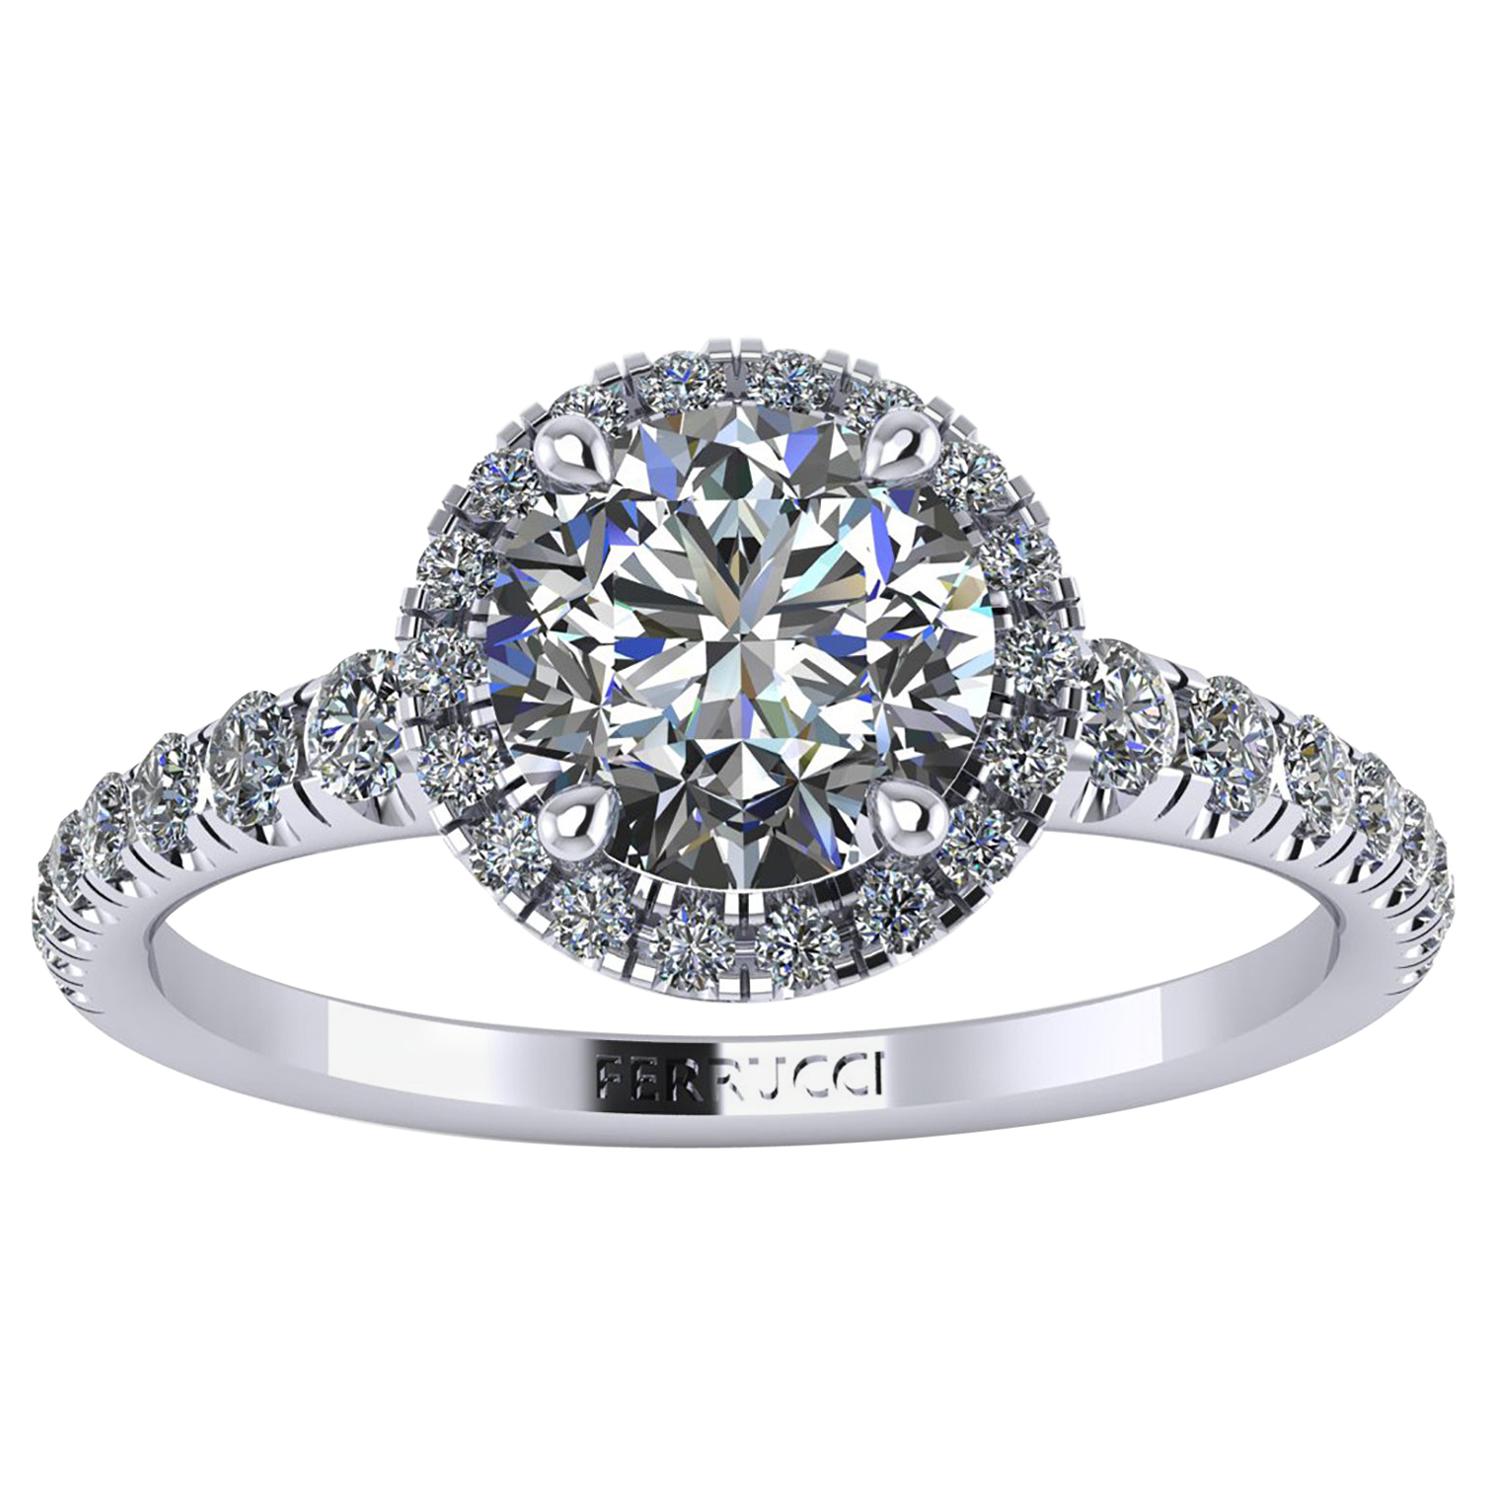 1.36 GIA Certified Round Brilliant Cut Diamond in Platinum 950 Engagement Ring